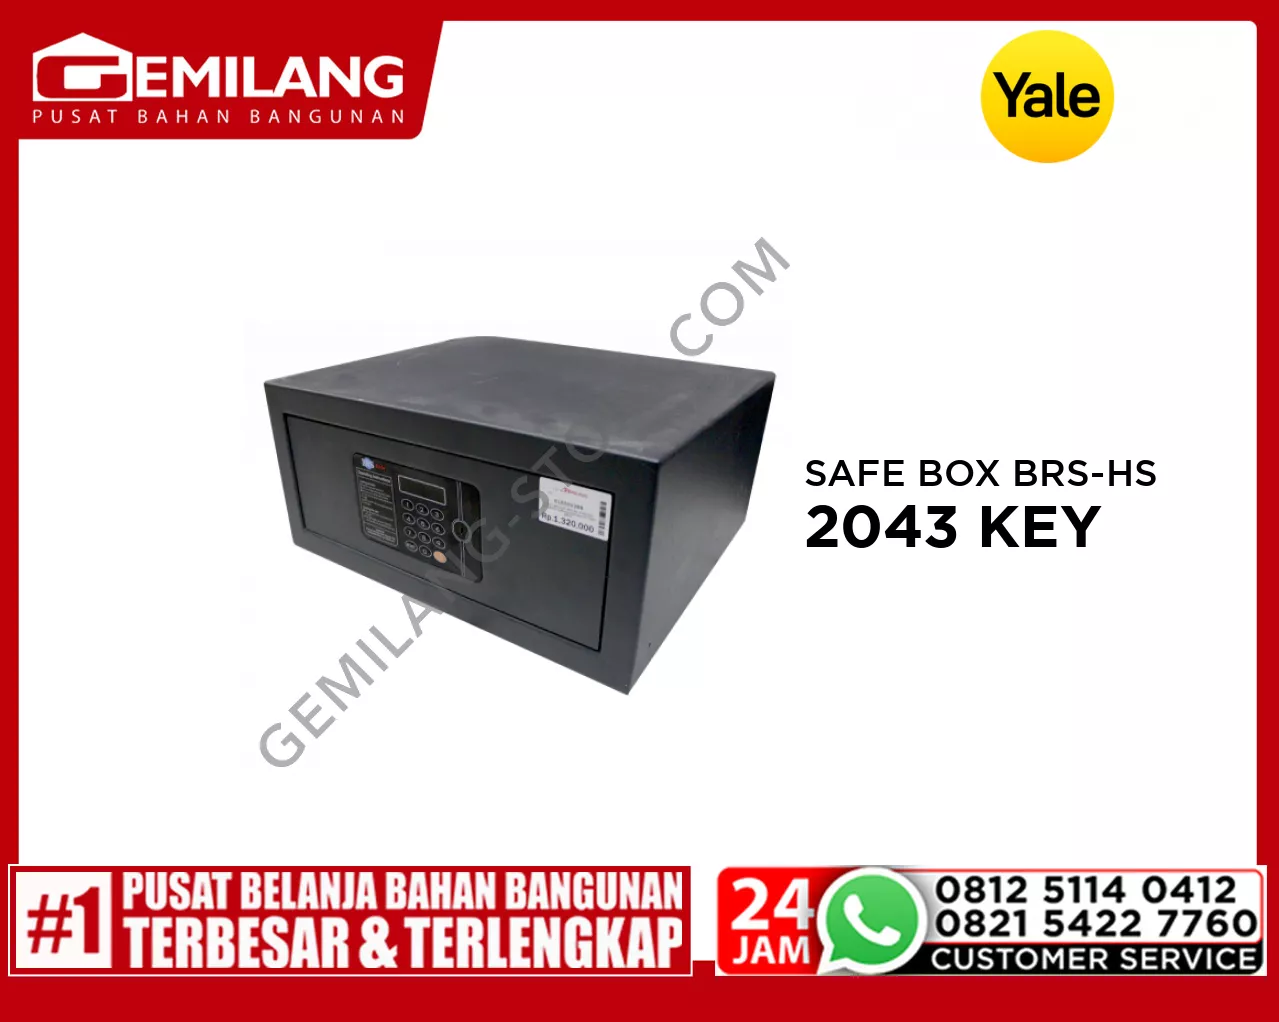 SAFE BOX BRS-HS 2043 KEY SEPARATE 195mmx430mmx370mm GREY